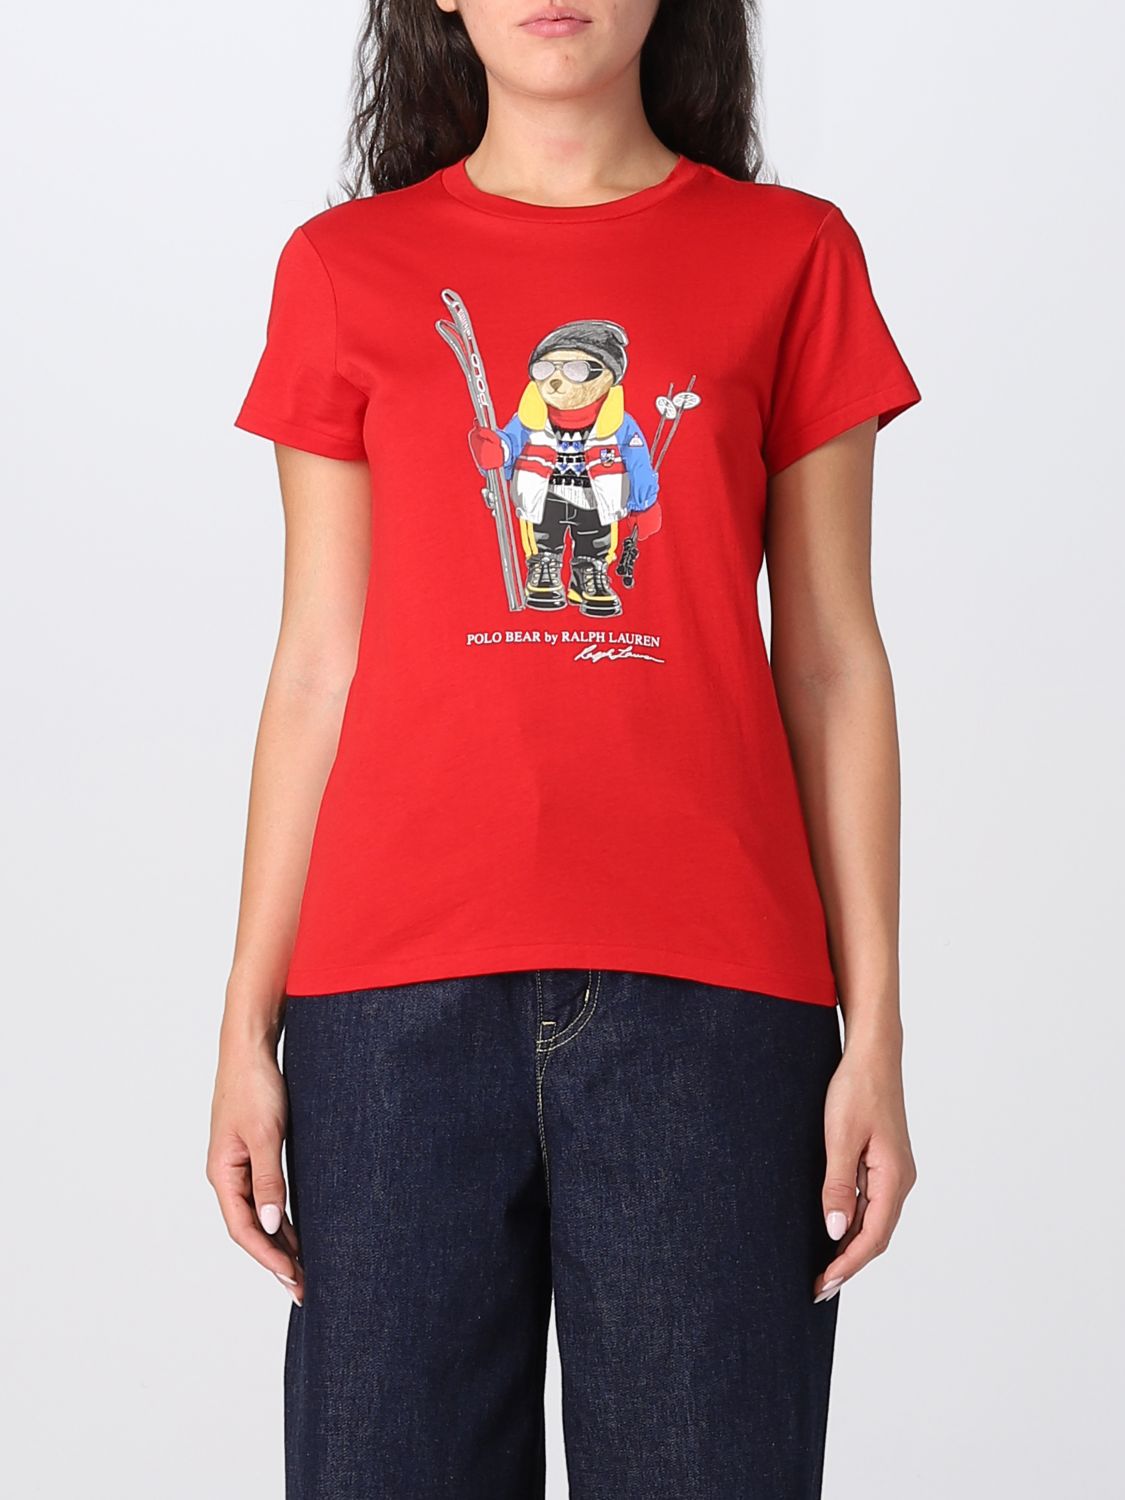 Polo Ralph Lauren Outlet: t-shirt for women - Red | Polo Ralph Lauren  t-shirt 211882281 online on 